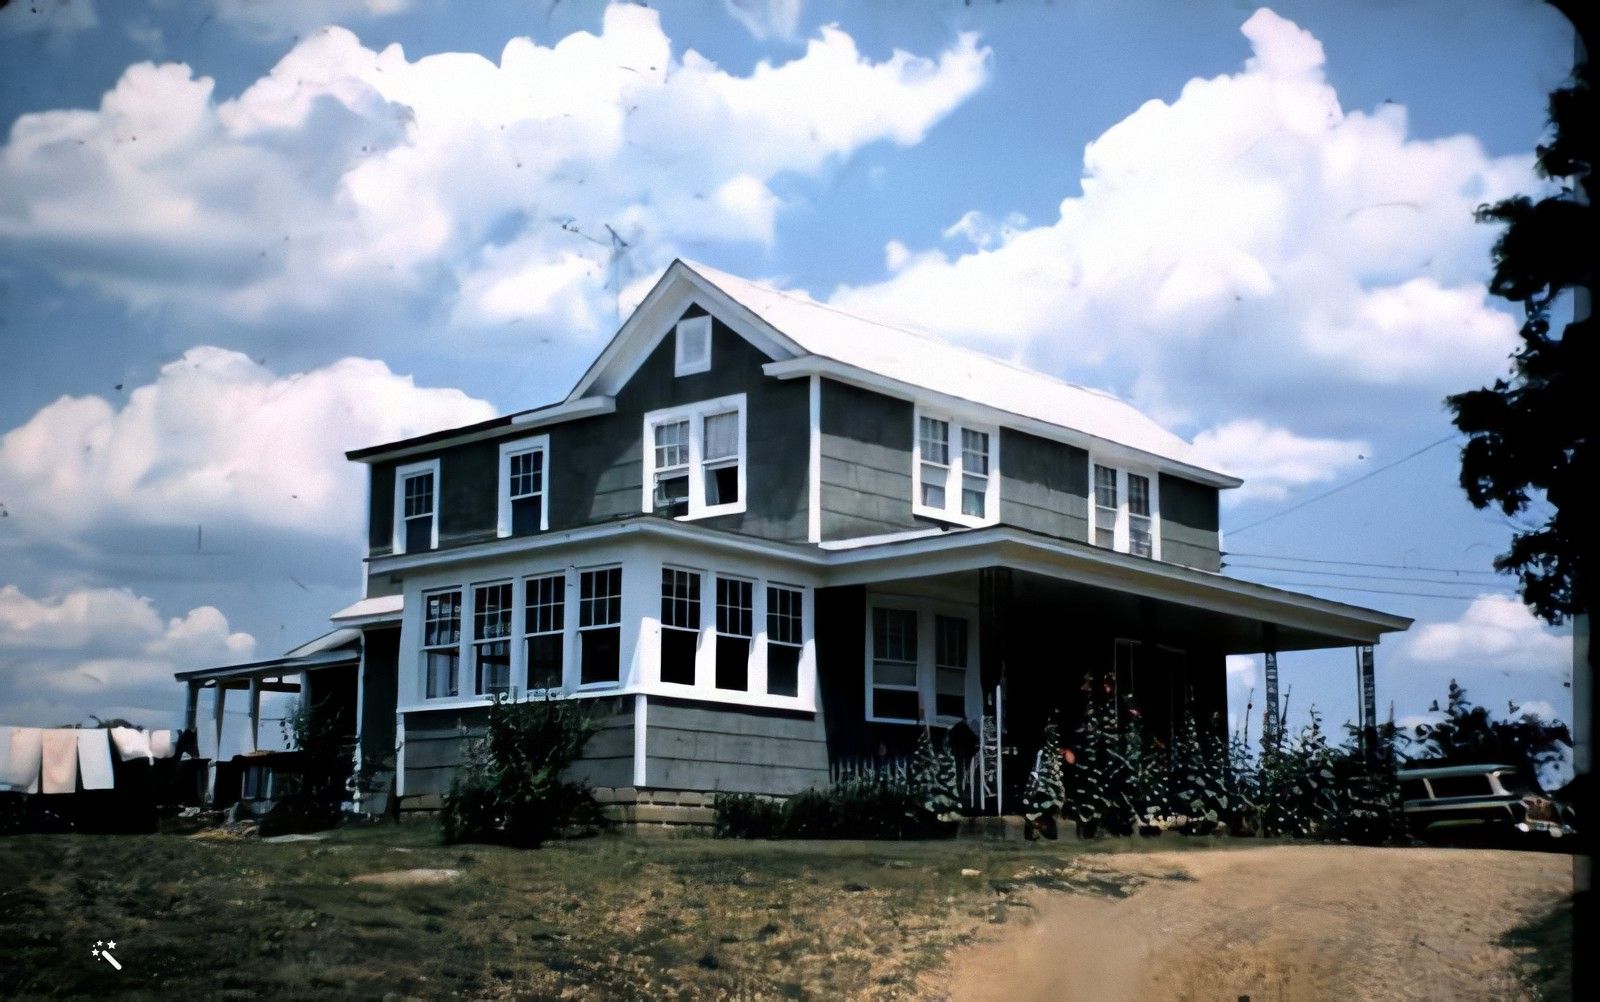 Lanzaro Farmhouse in Morganville 1960